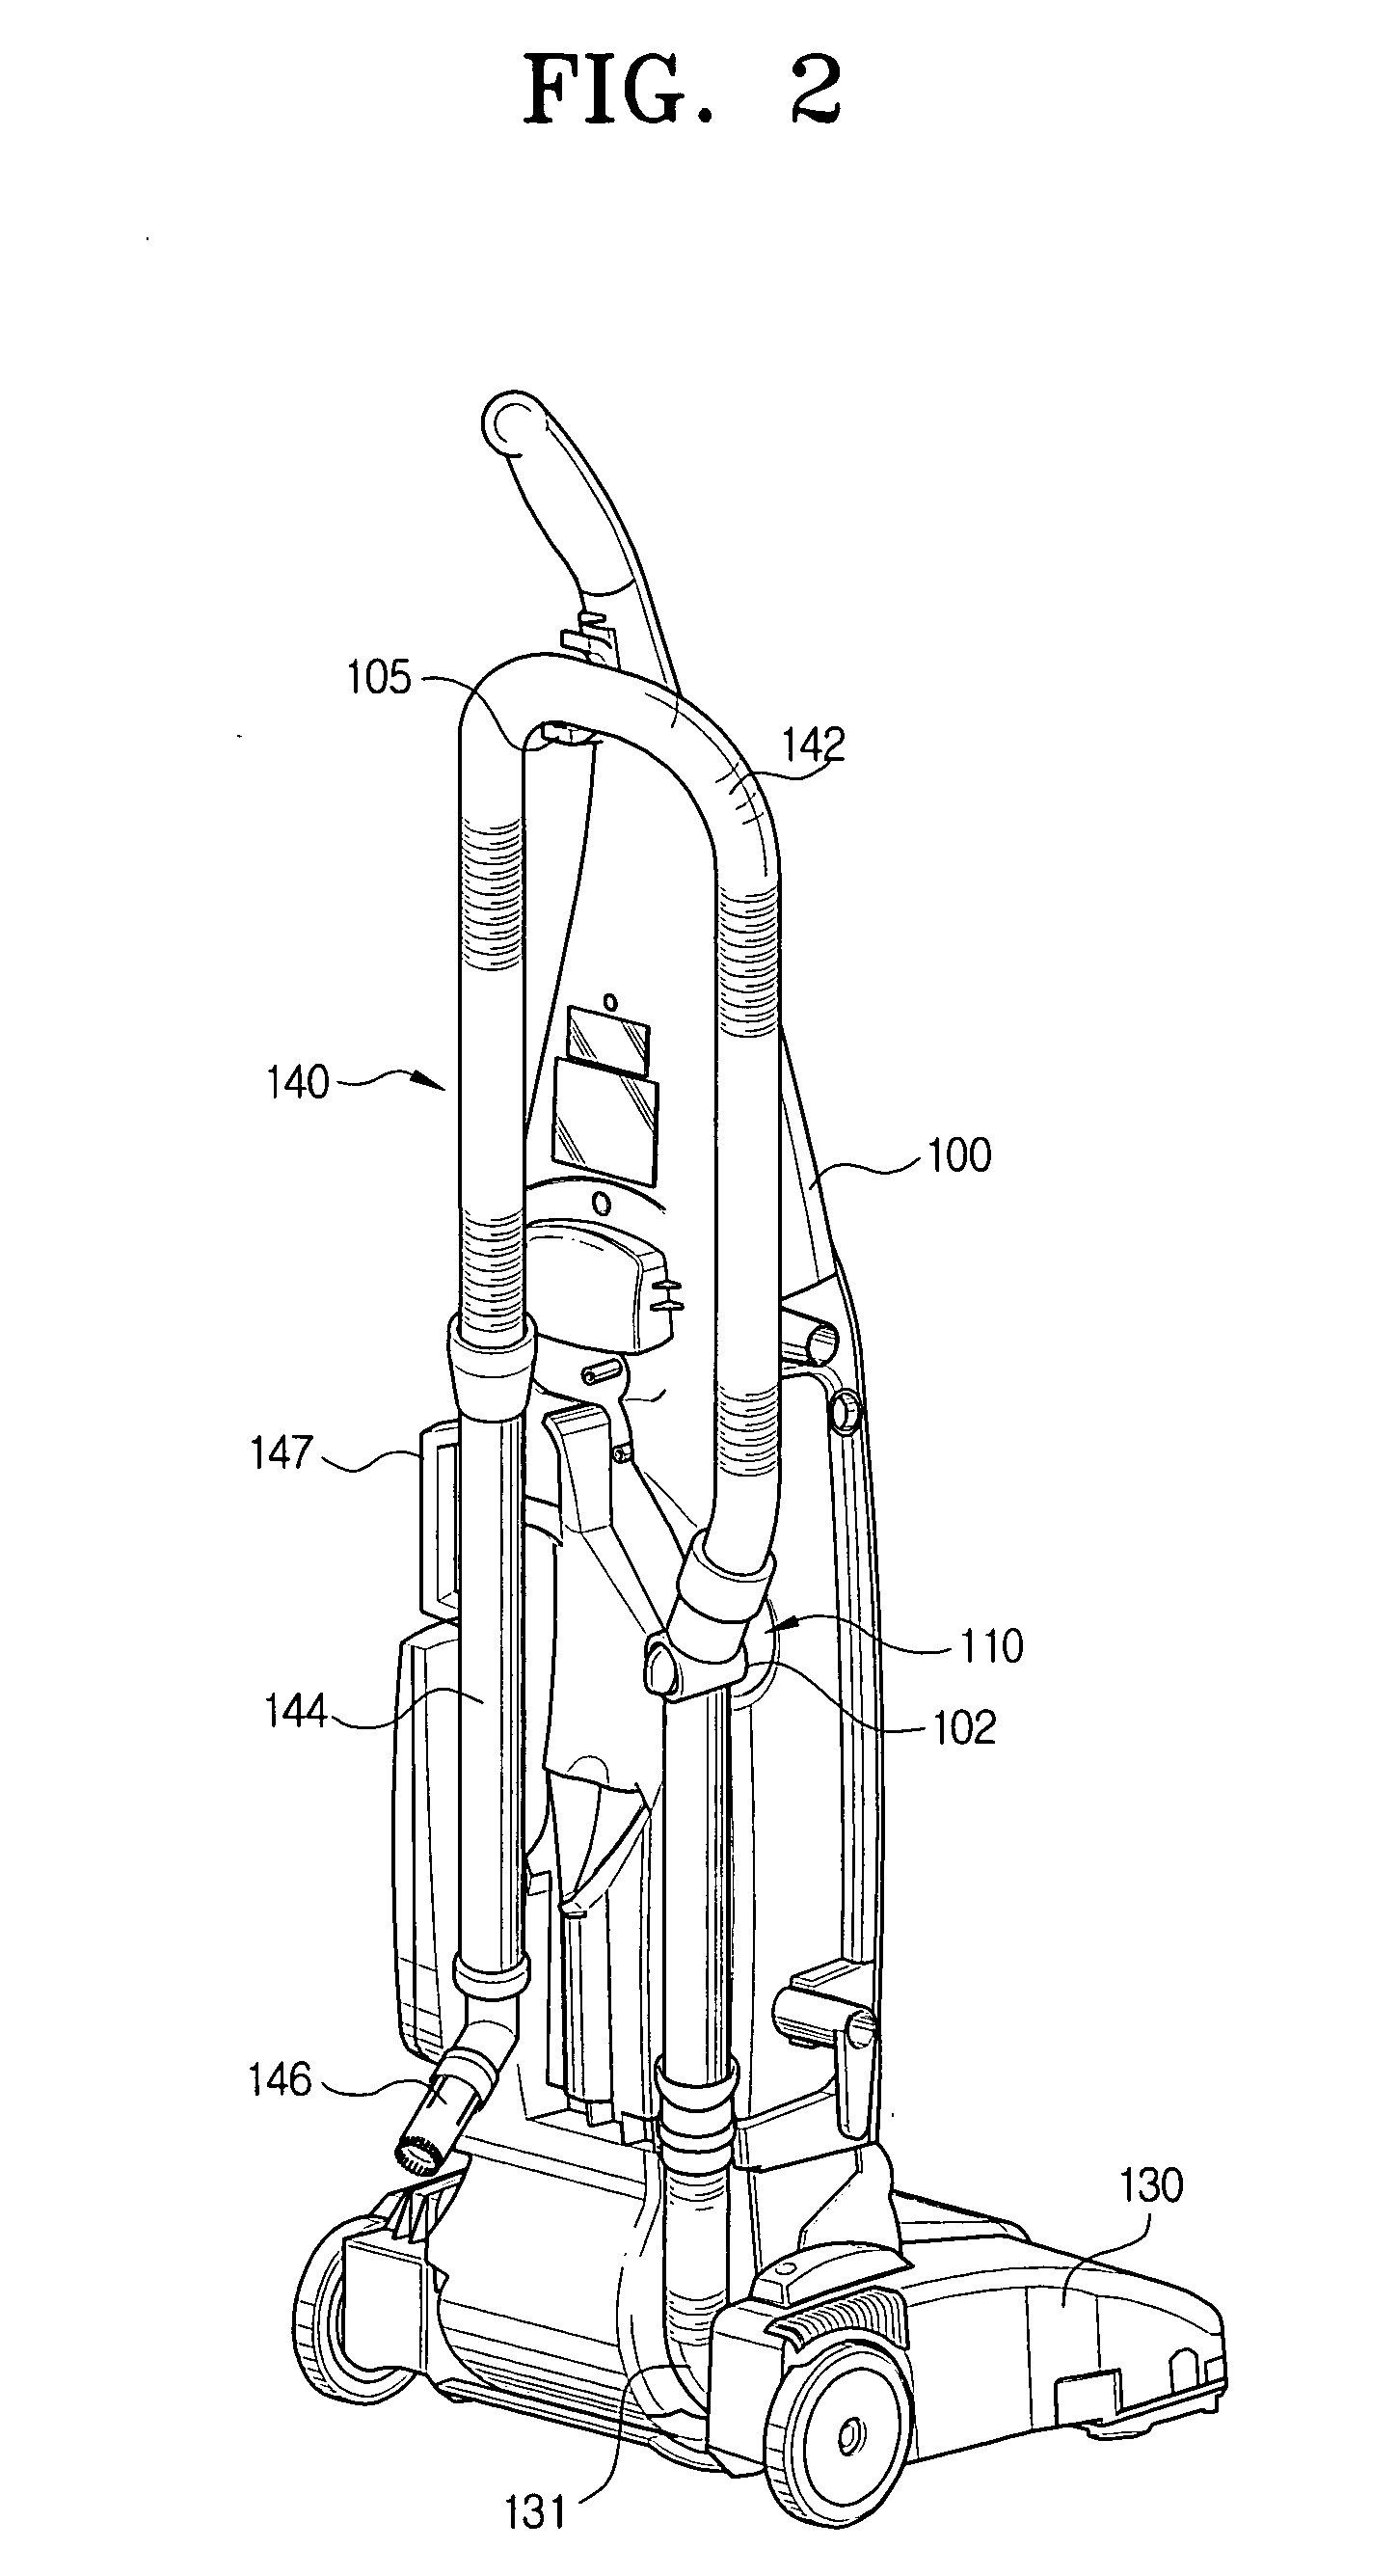 Airflow diverter for upright-type vacuum cleaner and upright-type vacuum cleaner having the same